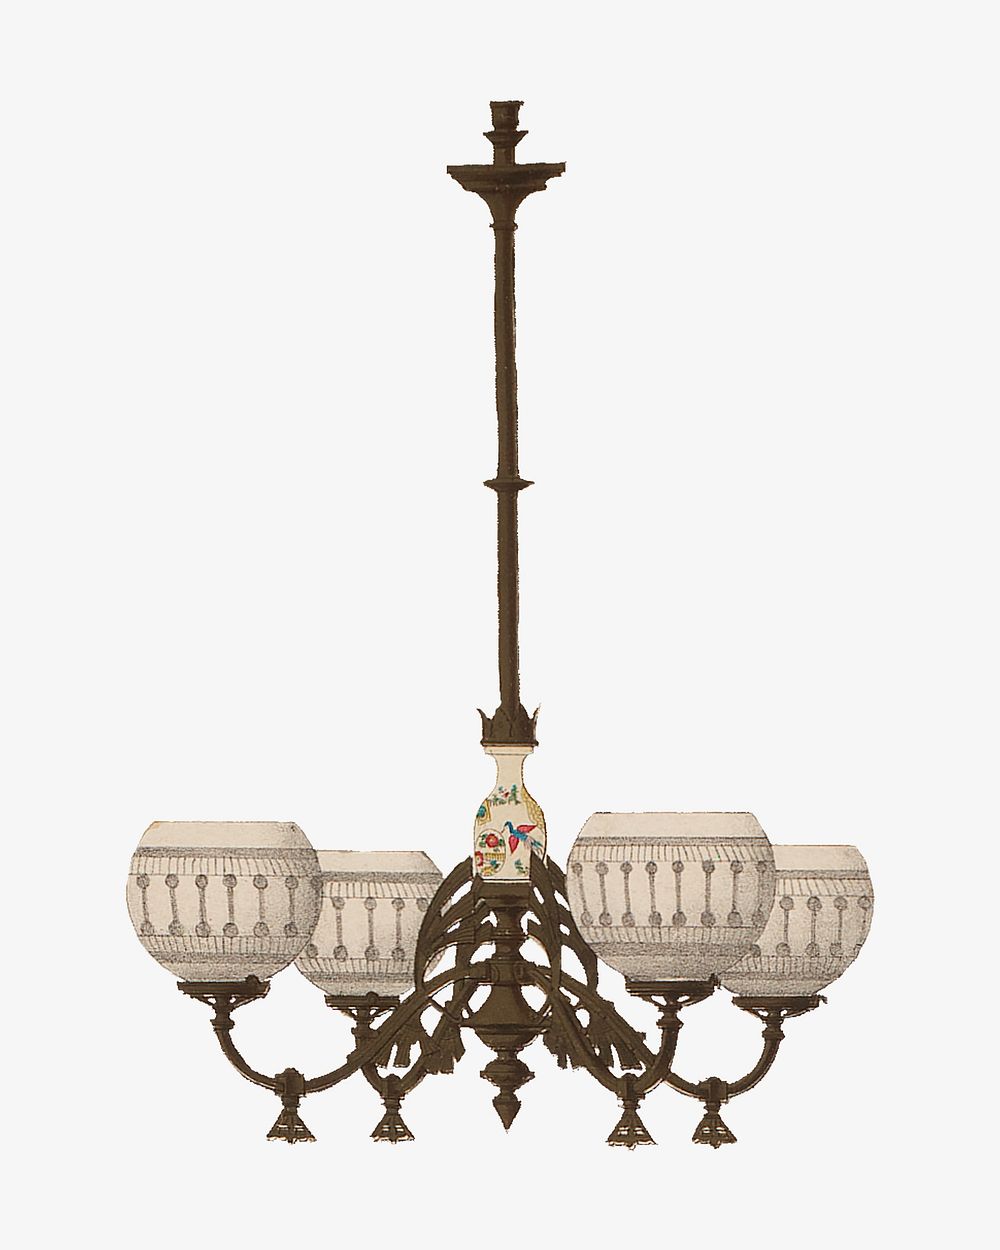 Vintage chandelier, Victorian home decor illustration. Remastered by rawpixel.